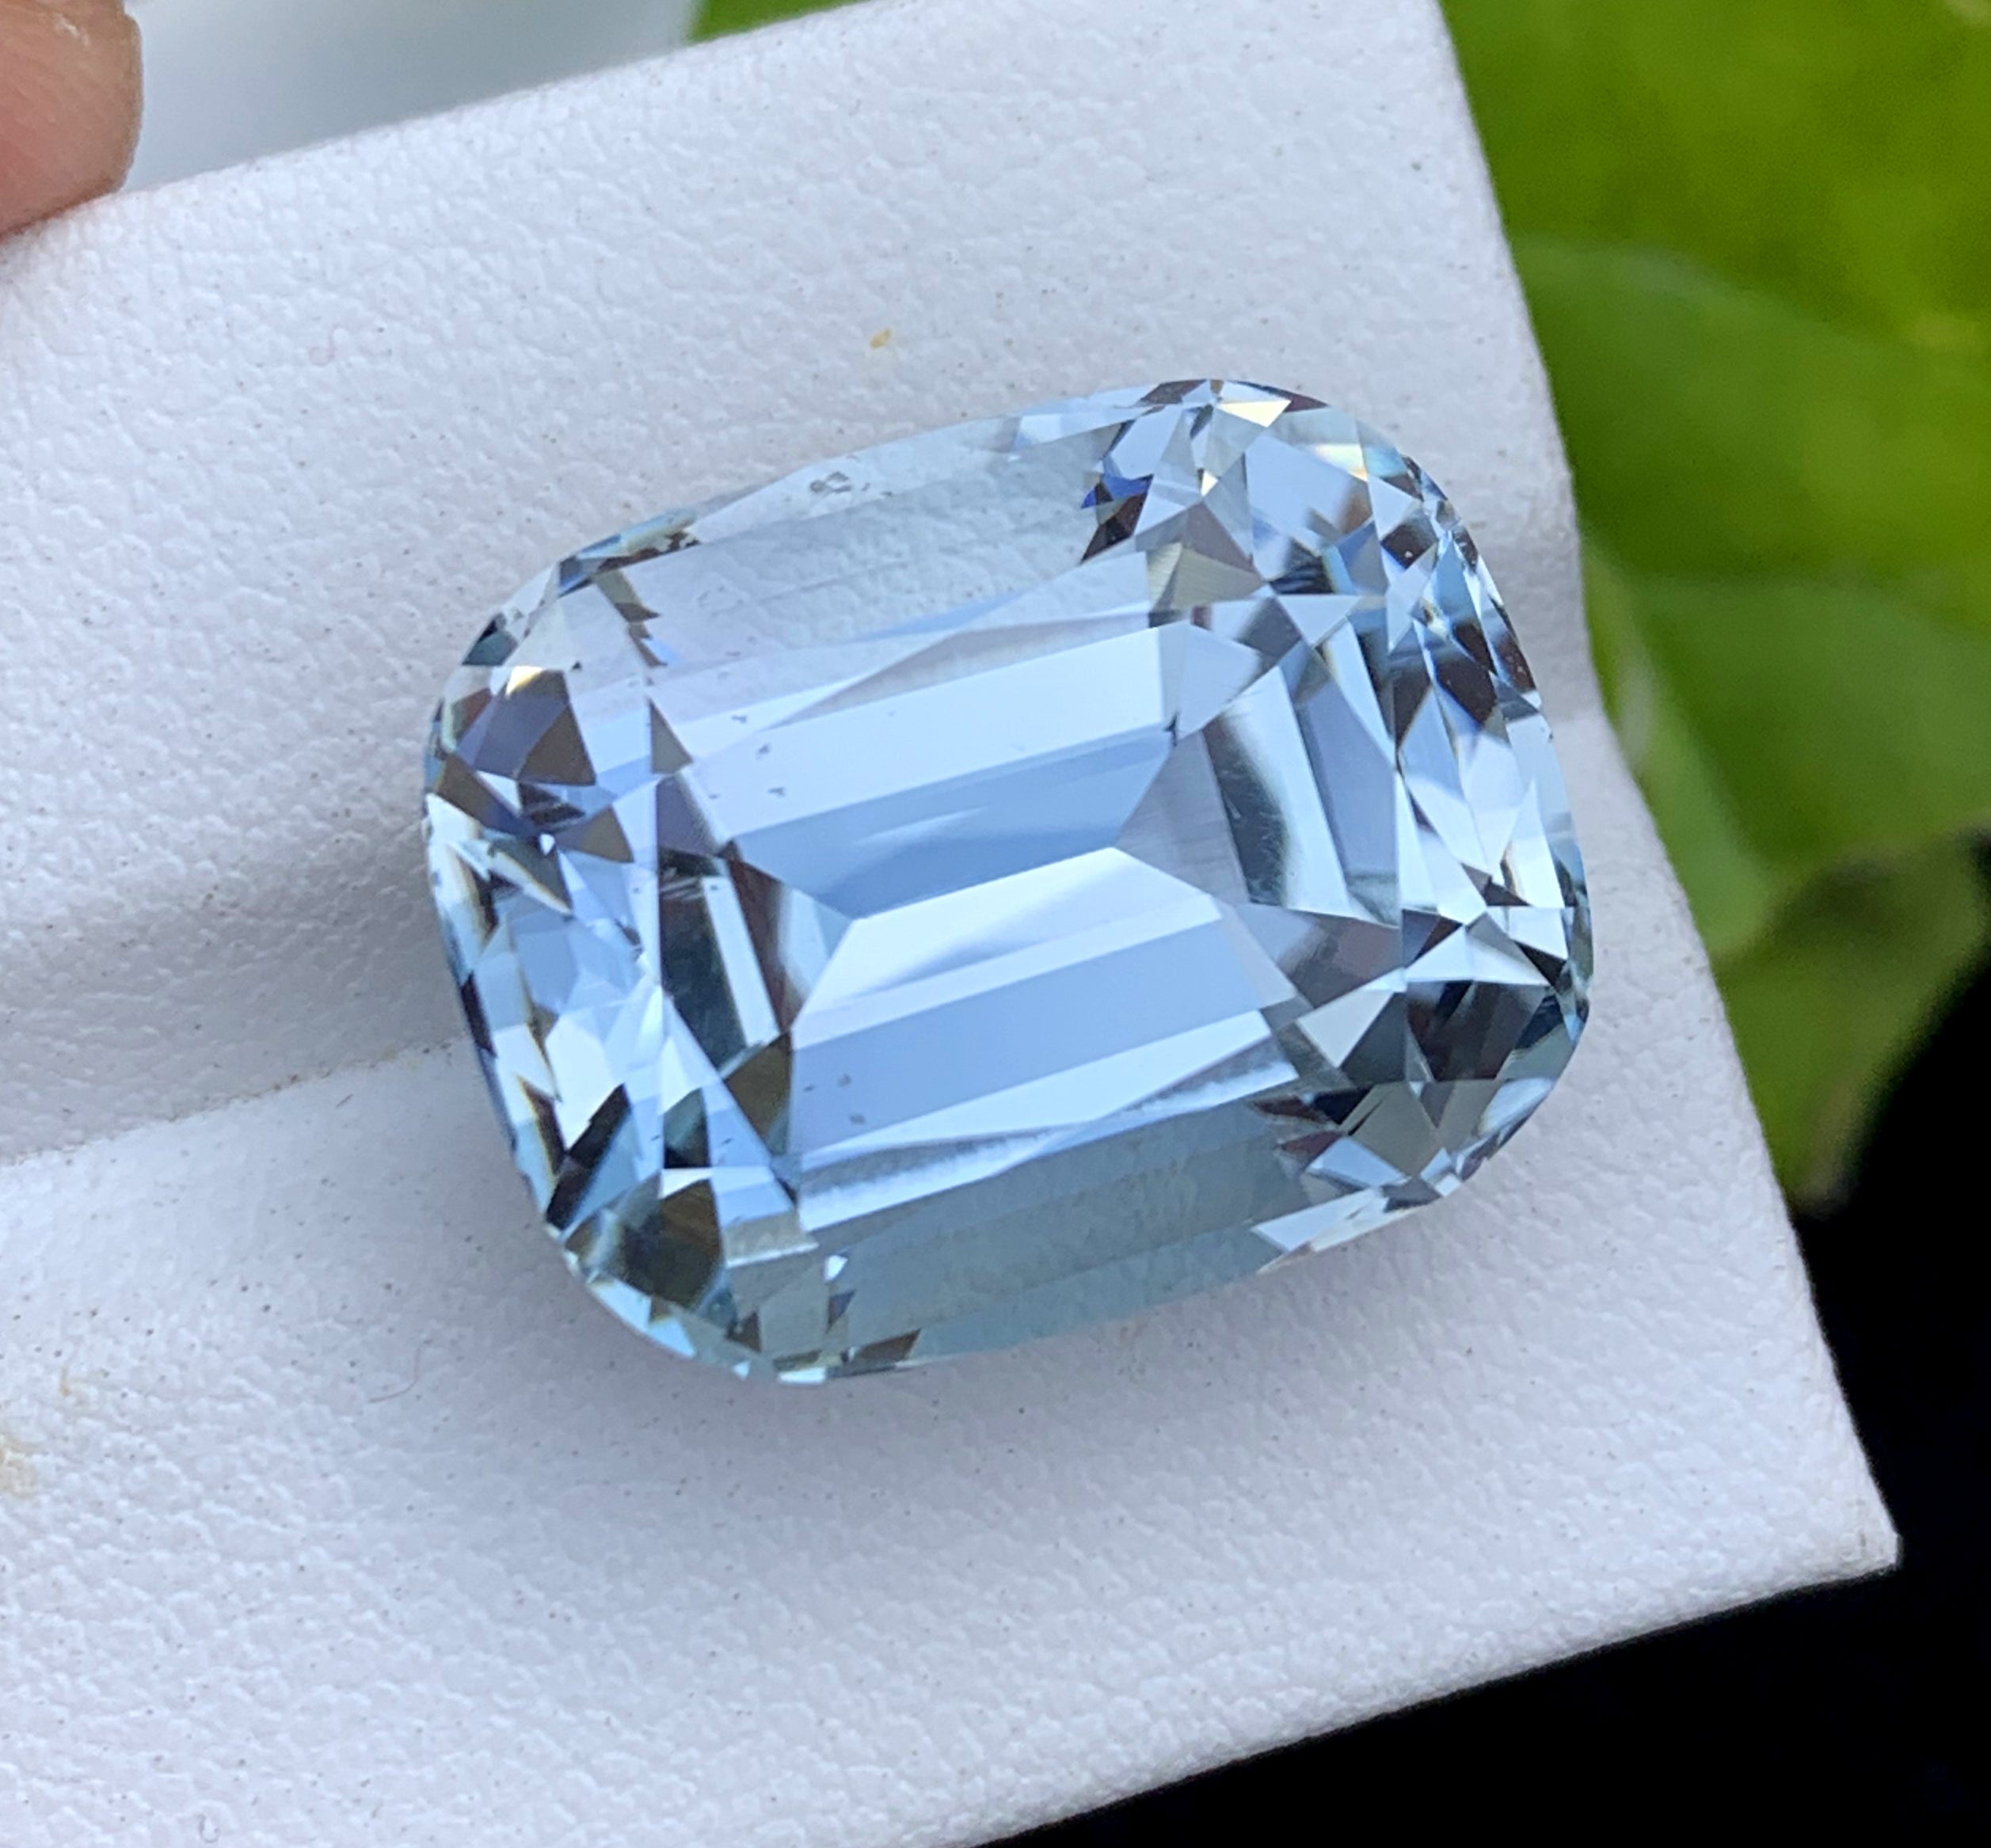 Cusshion Cut Natural Aquamarne Gemstone, Loose Gemstone, Aqua Faceted Cut Stone, Gemstone Jewelry - 27.70 CT